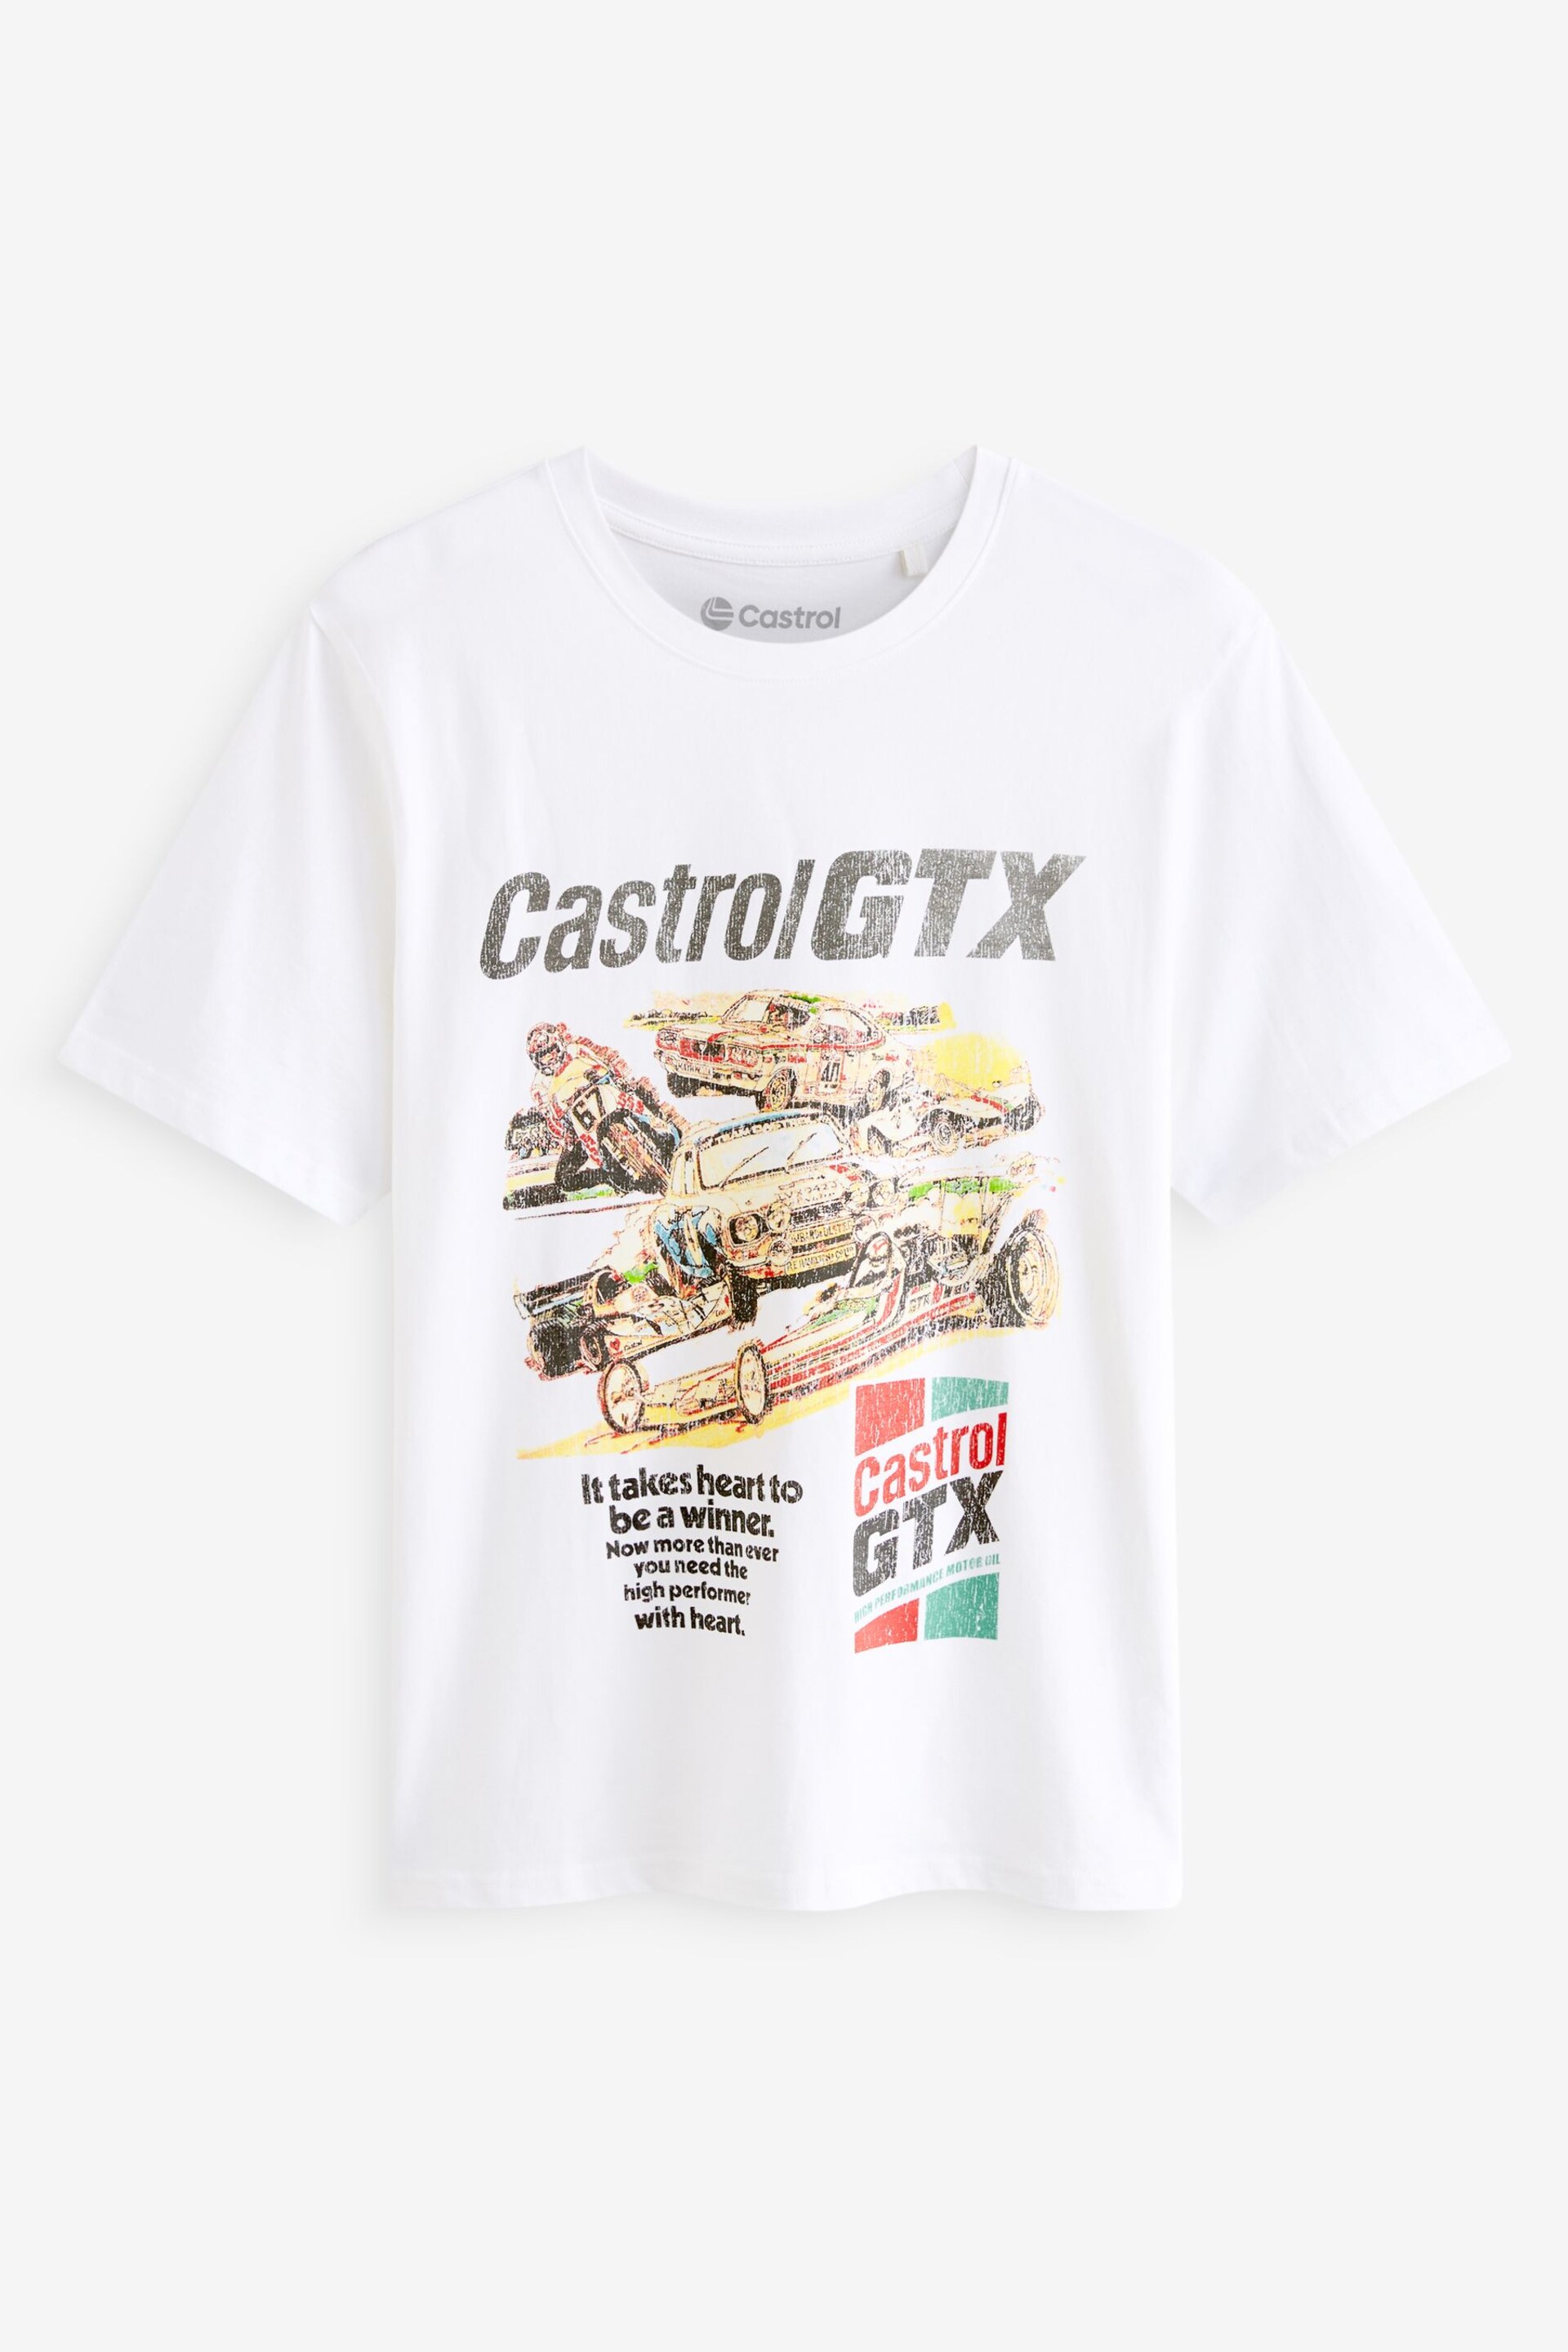 Castrol White License T-Shirt - Image 1 of 3